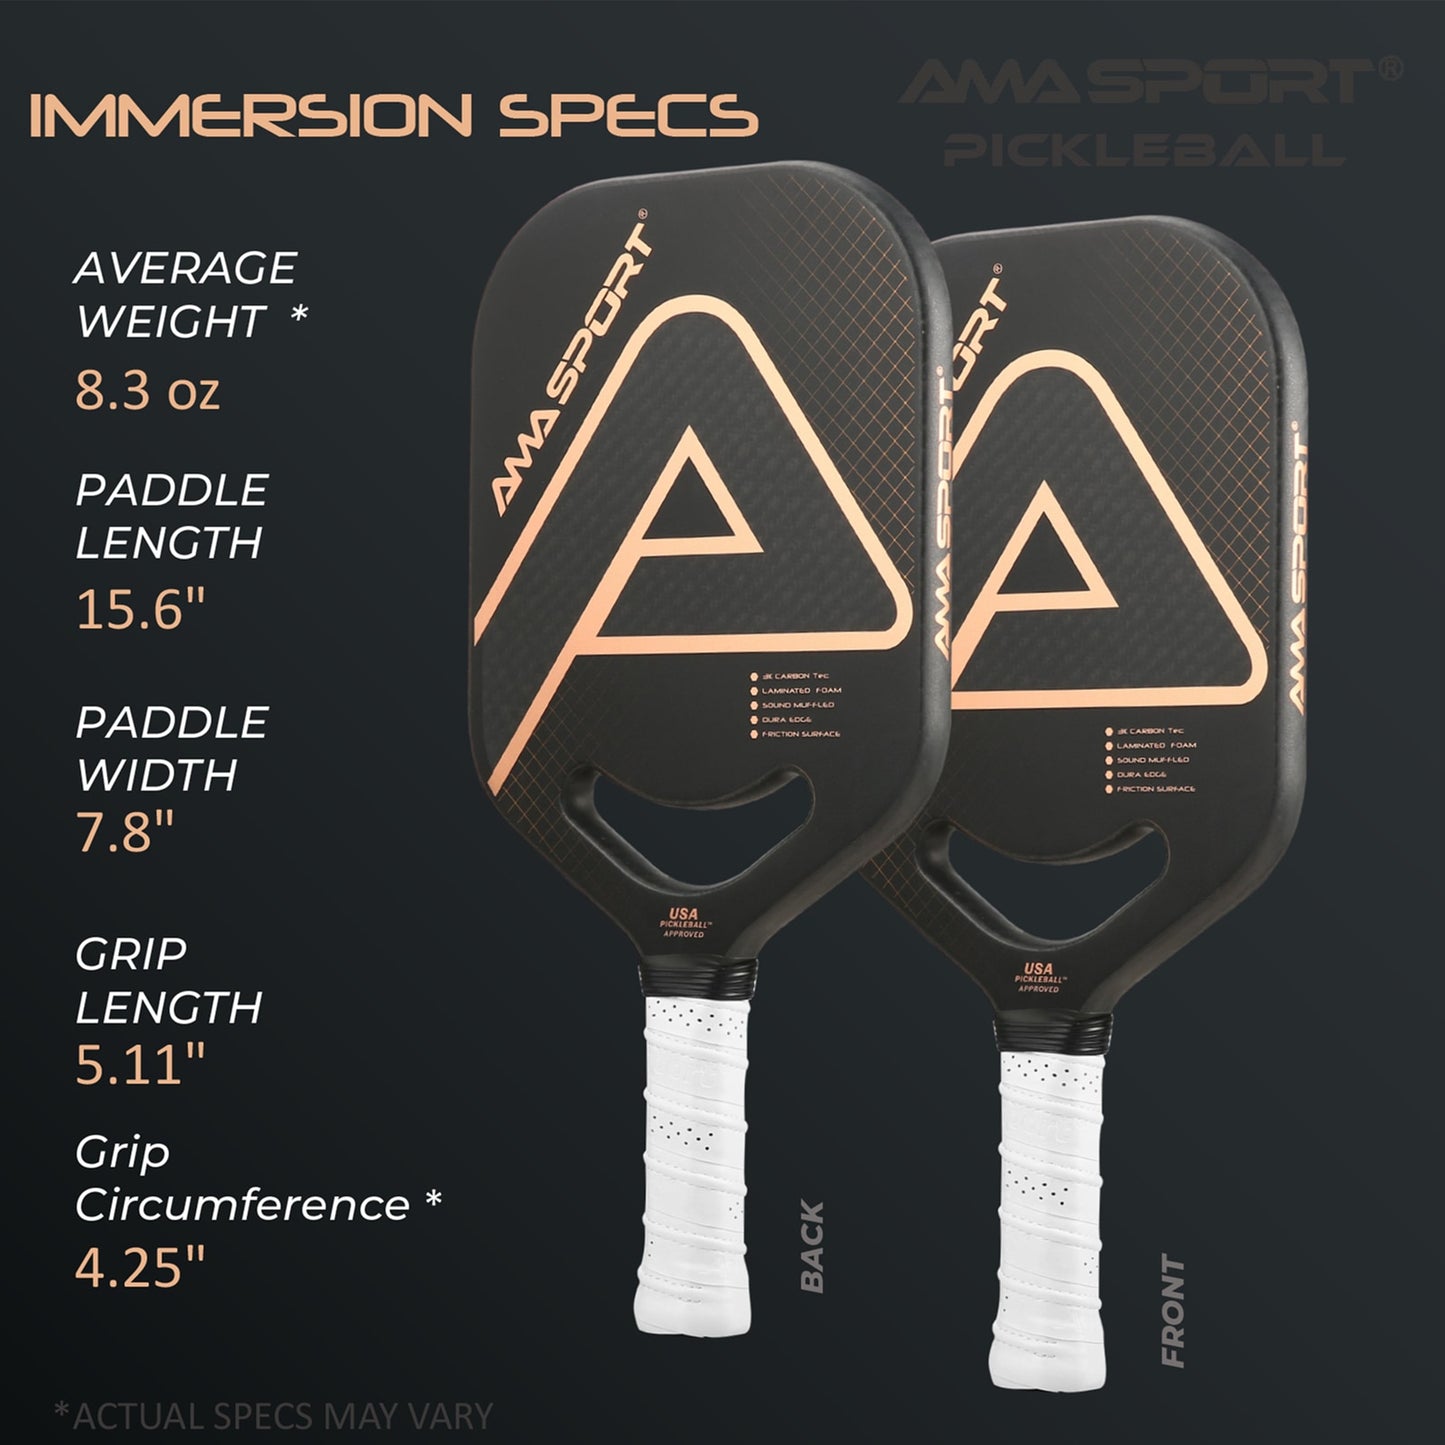 AMASPORT Fusion & Immersion Pickleball Paddle - Carbon Fiber Composite